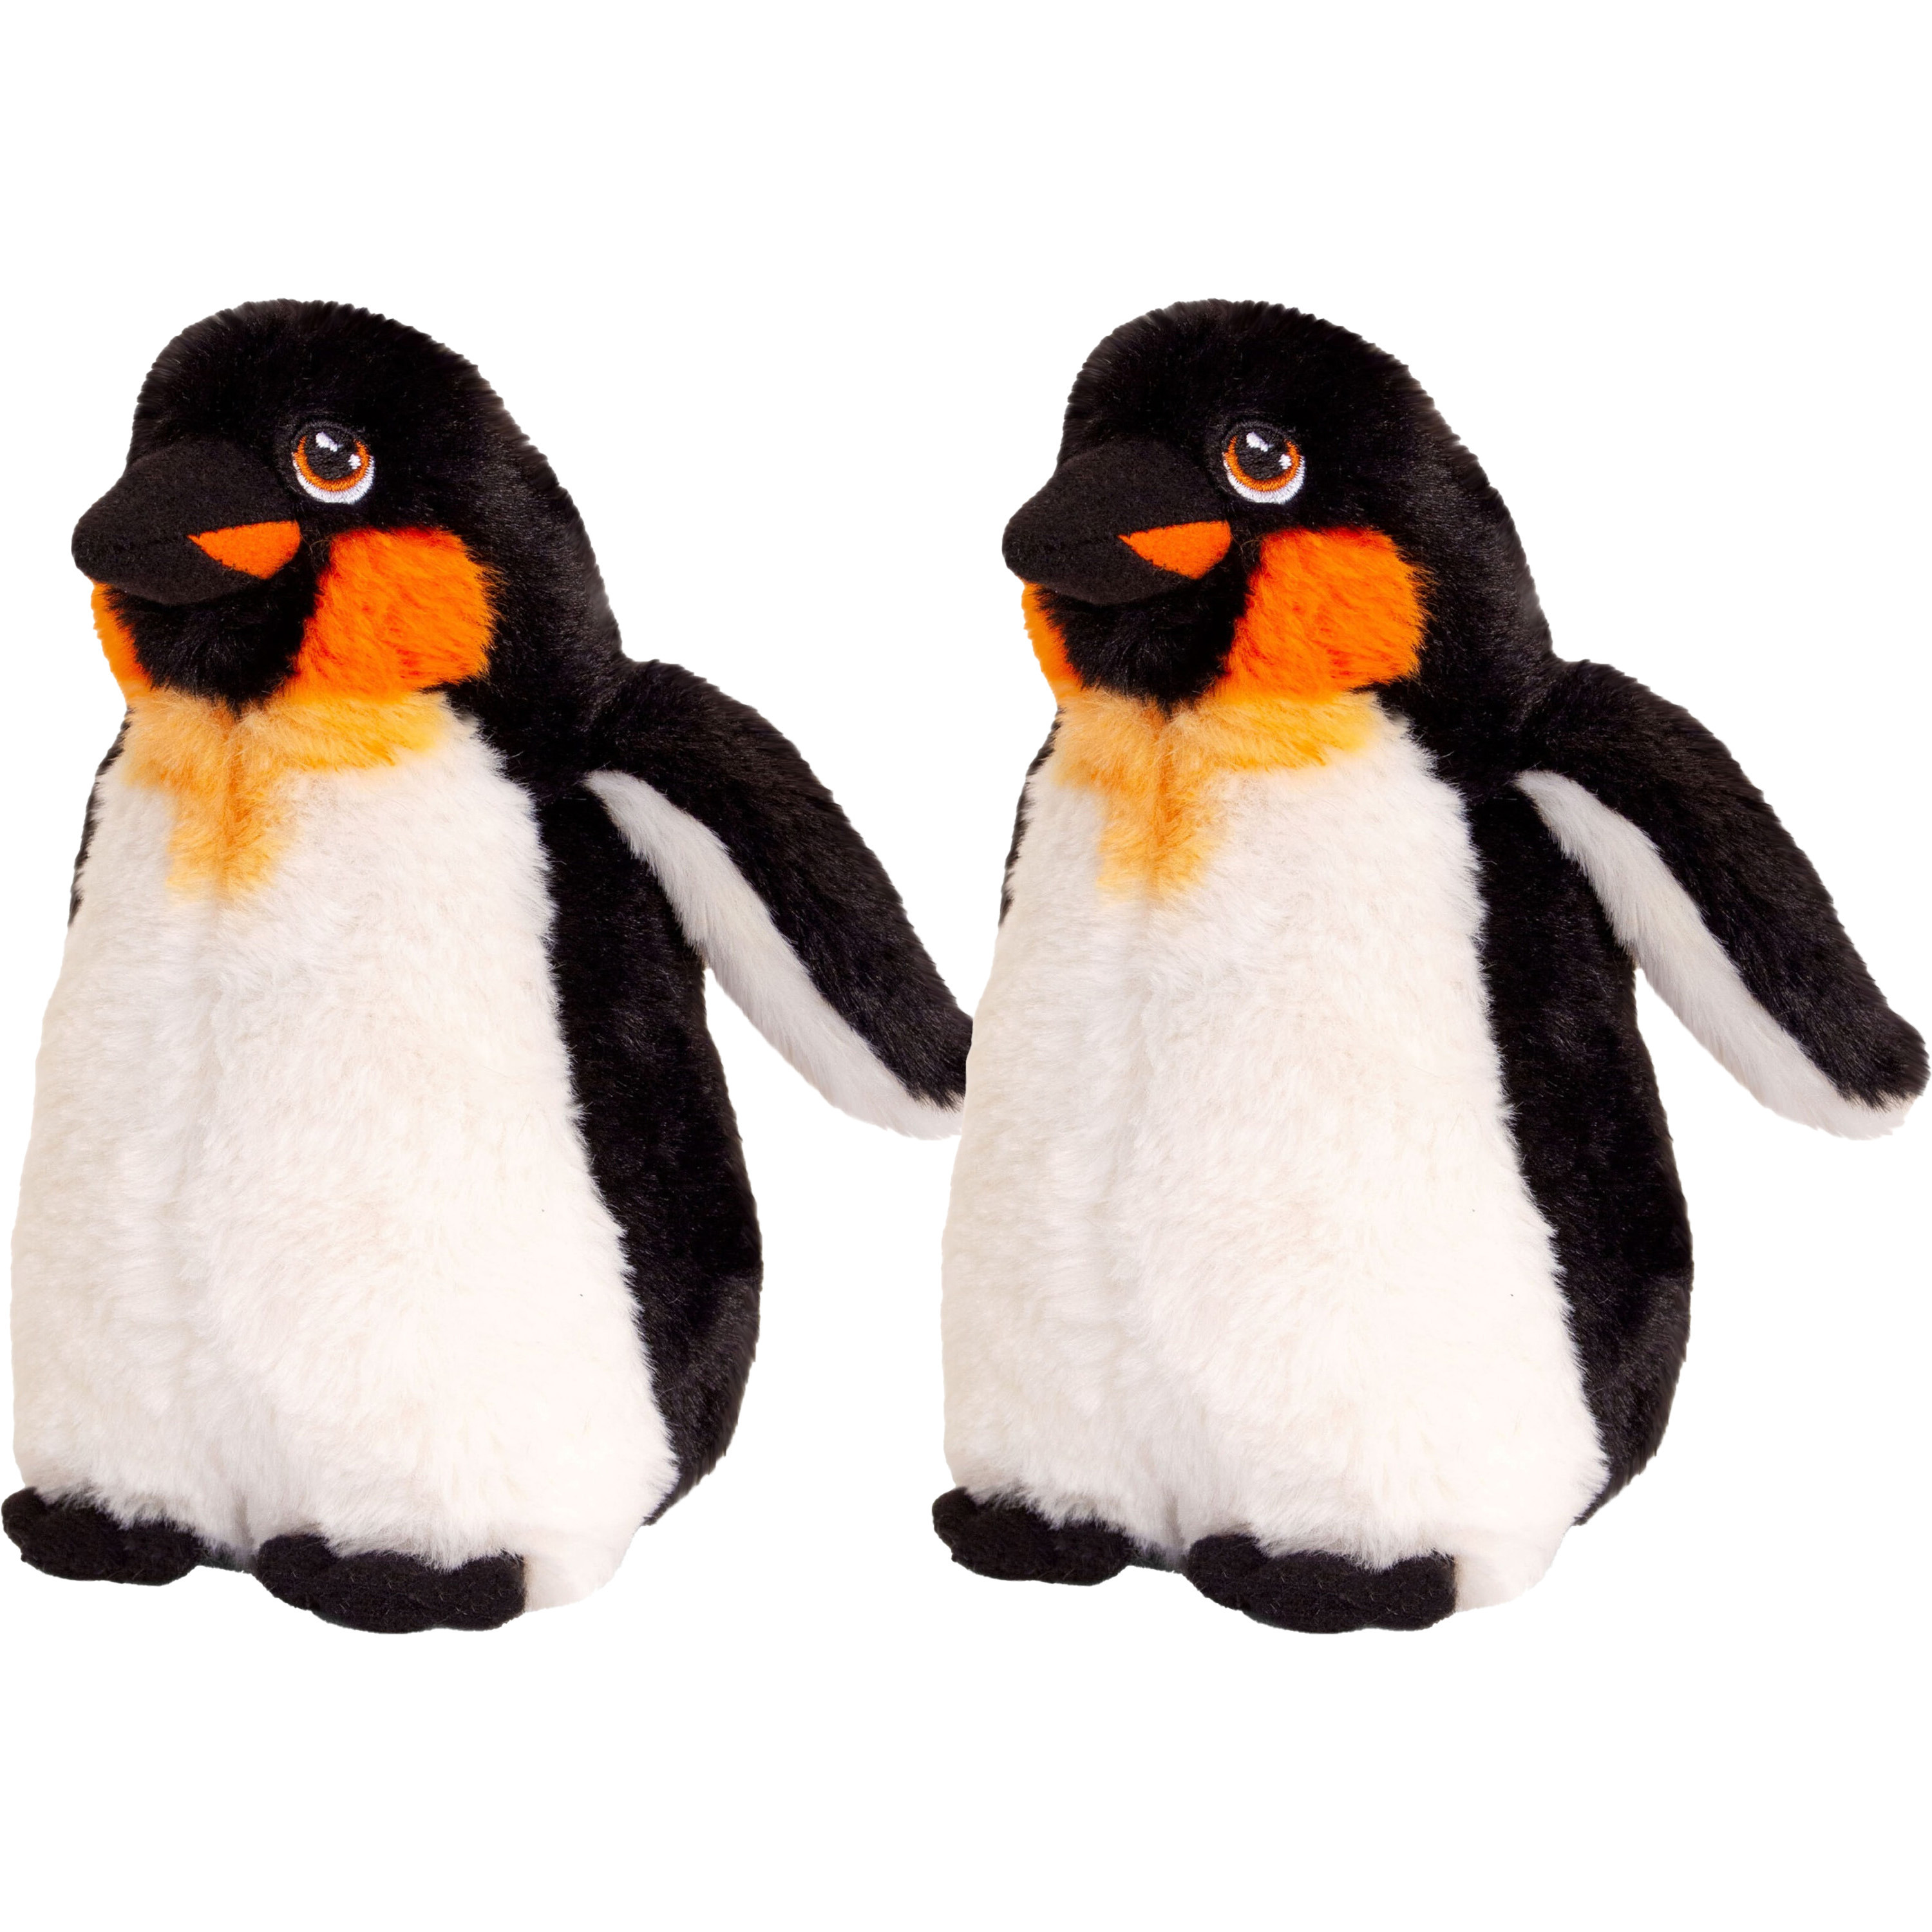 Keel Toys pluche keizers pinguin knuffeldier - 2x - wit/zwart - staand - 20 cm -